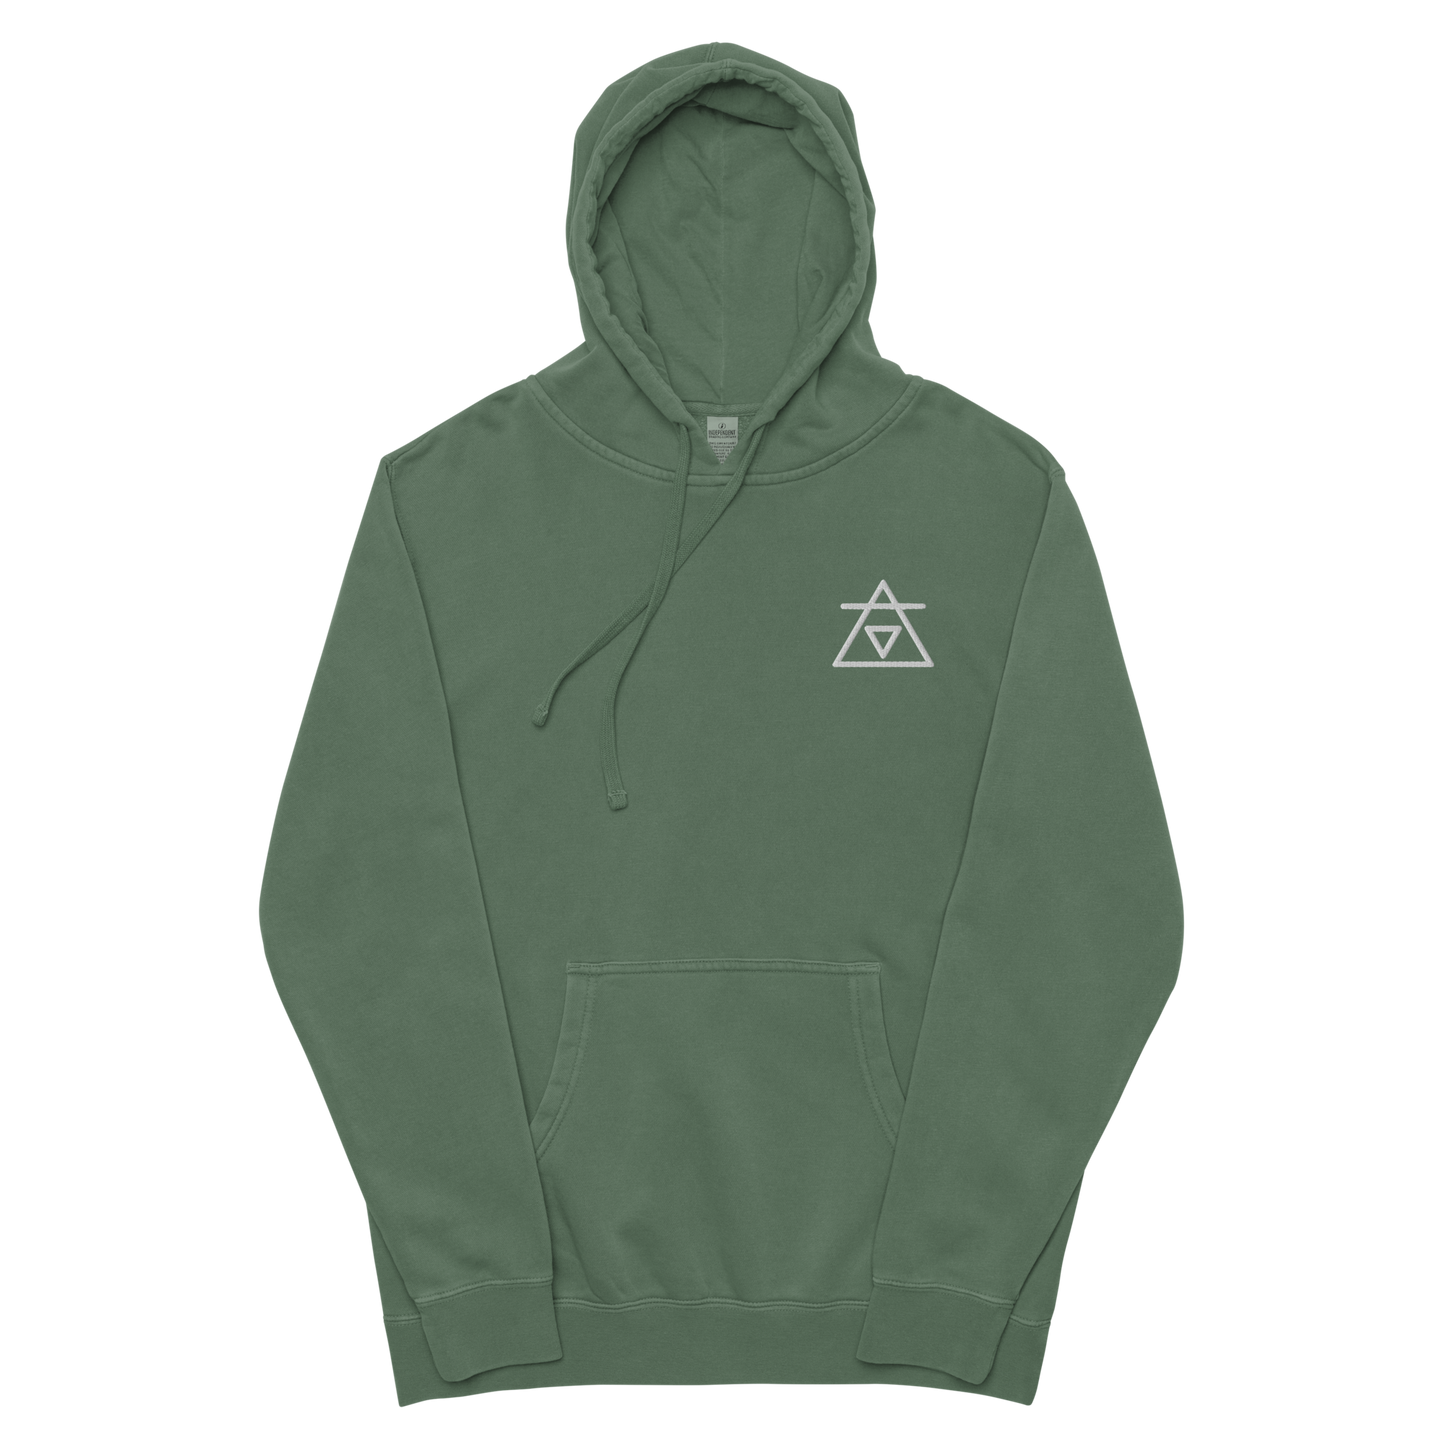 Flagstaff green comfy hoodie